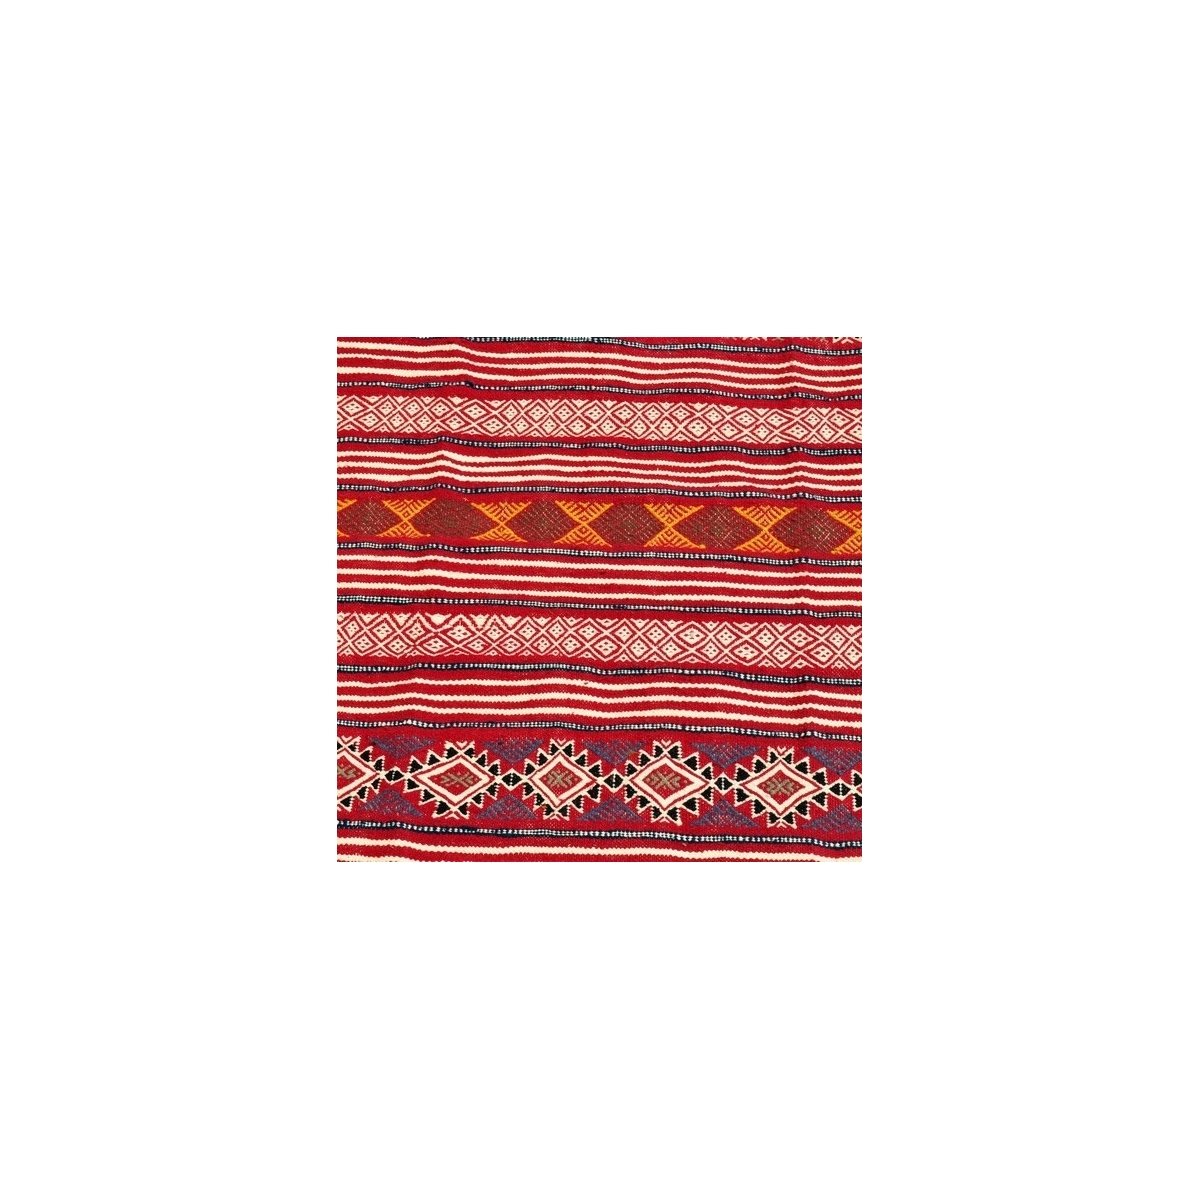 Tapis berbère Grand Tapis Kilim Mahres 110x200 Rouge (Tissé main, Laine, Tunisie) Tapis kilim tunisien style tapis marocain. Tap